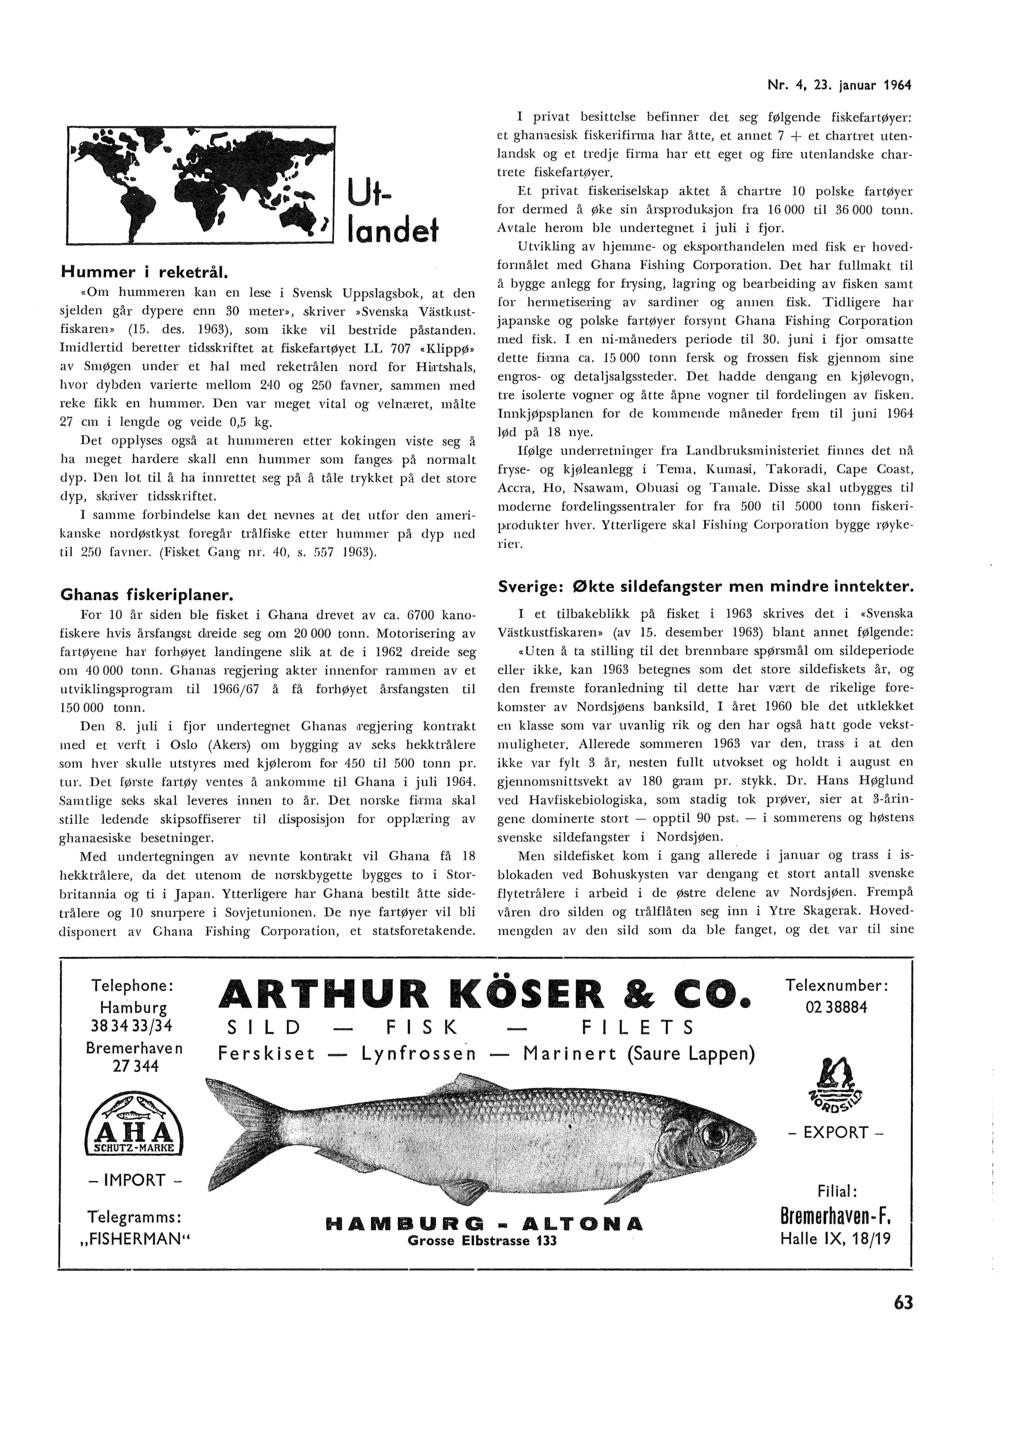 Nr. 4, 23. januar 1964 Utandet Hummer i reketrå. <<Om hummeren kan en ese i Svensk Uppsagsbok, at den sjeden går dypere enn 30 meter», skriver»svenska Vastkustfiskaren» (15. des.